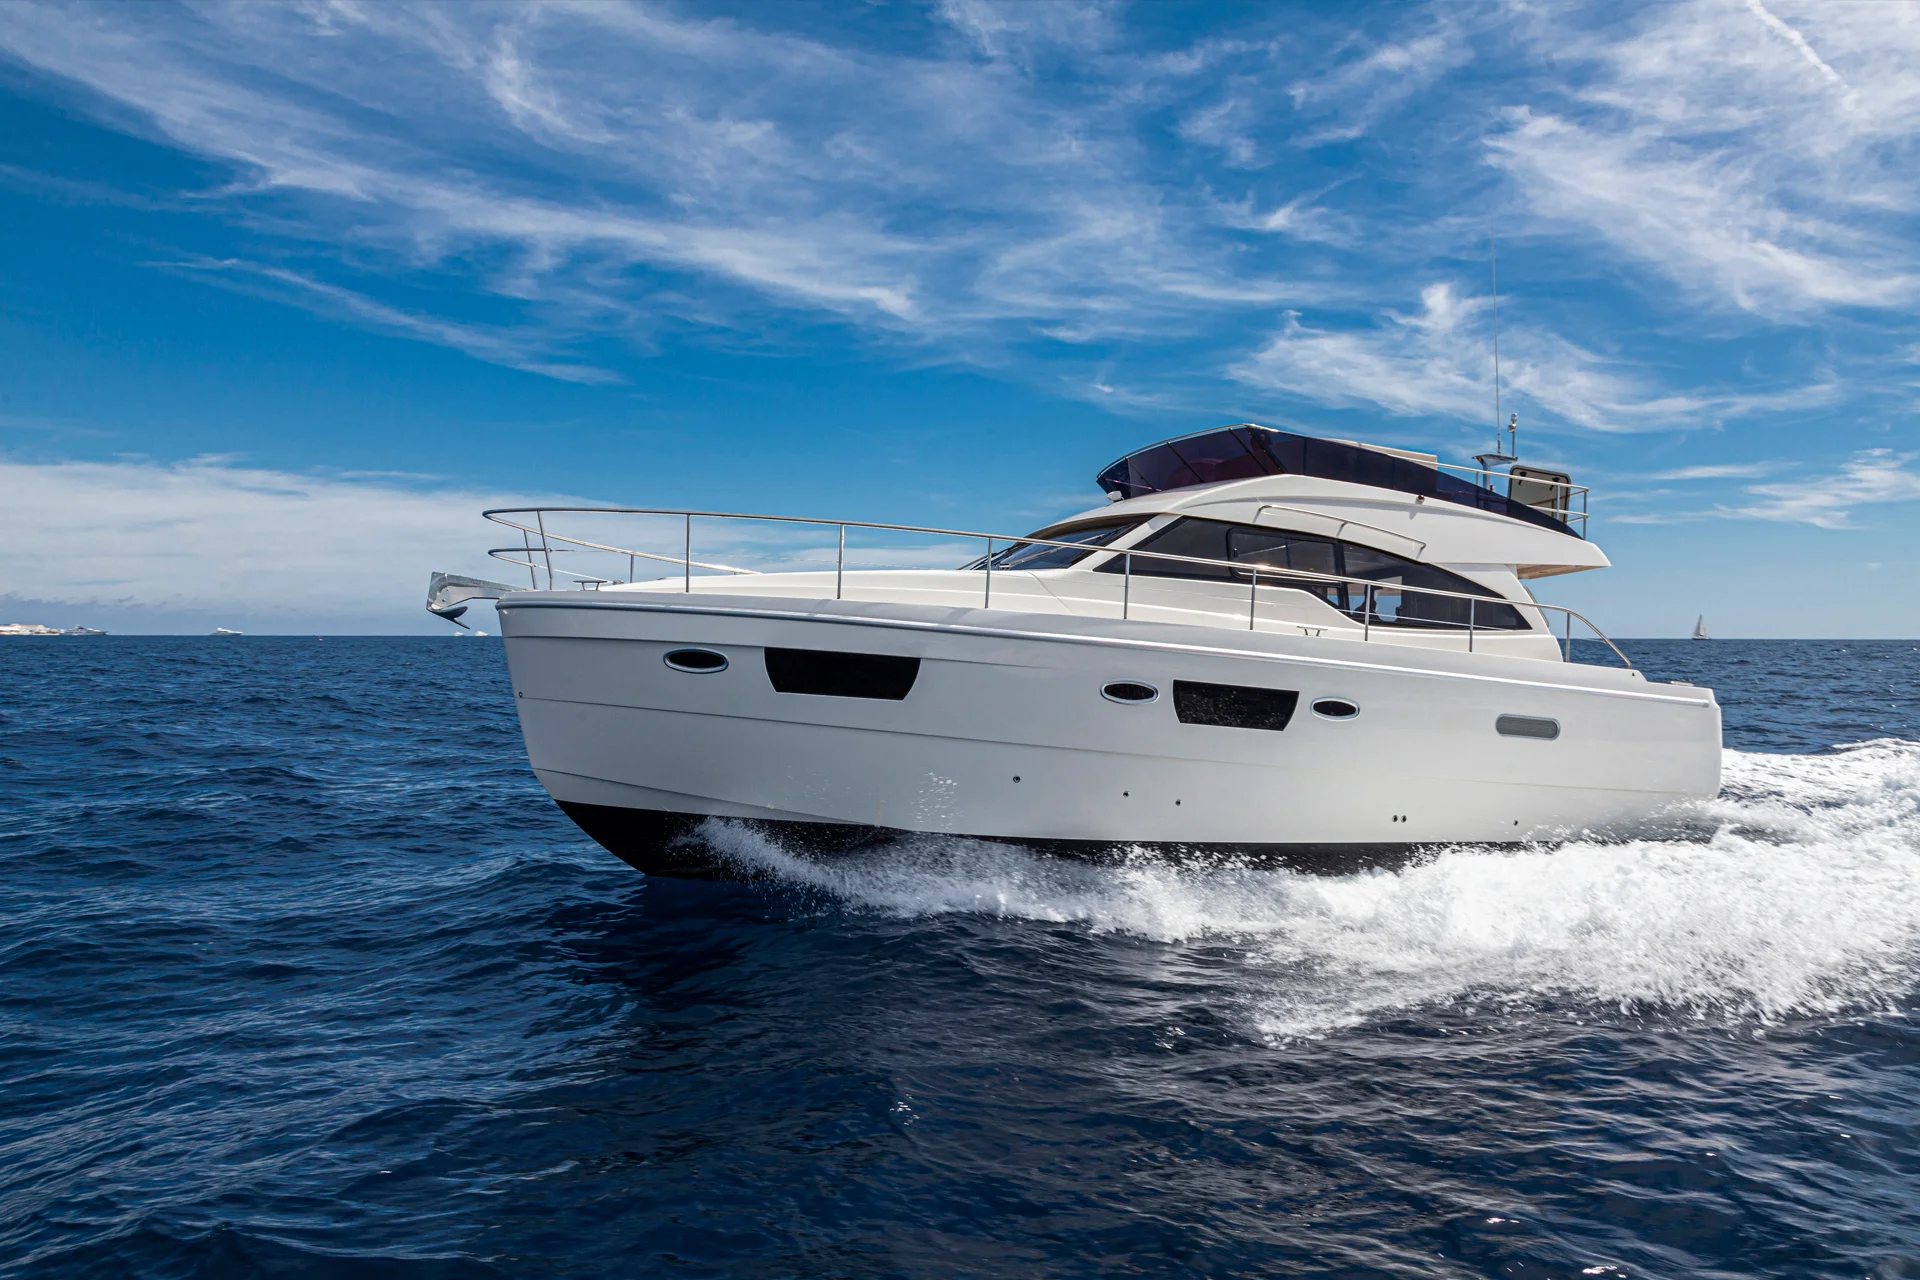 Powered catamaran yacht charter speeding in blue waters